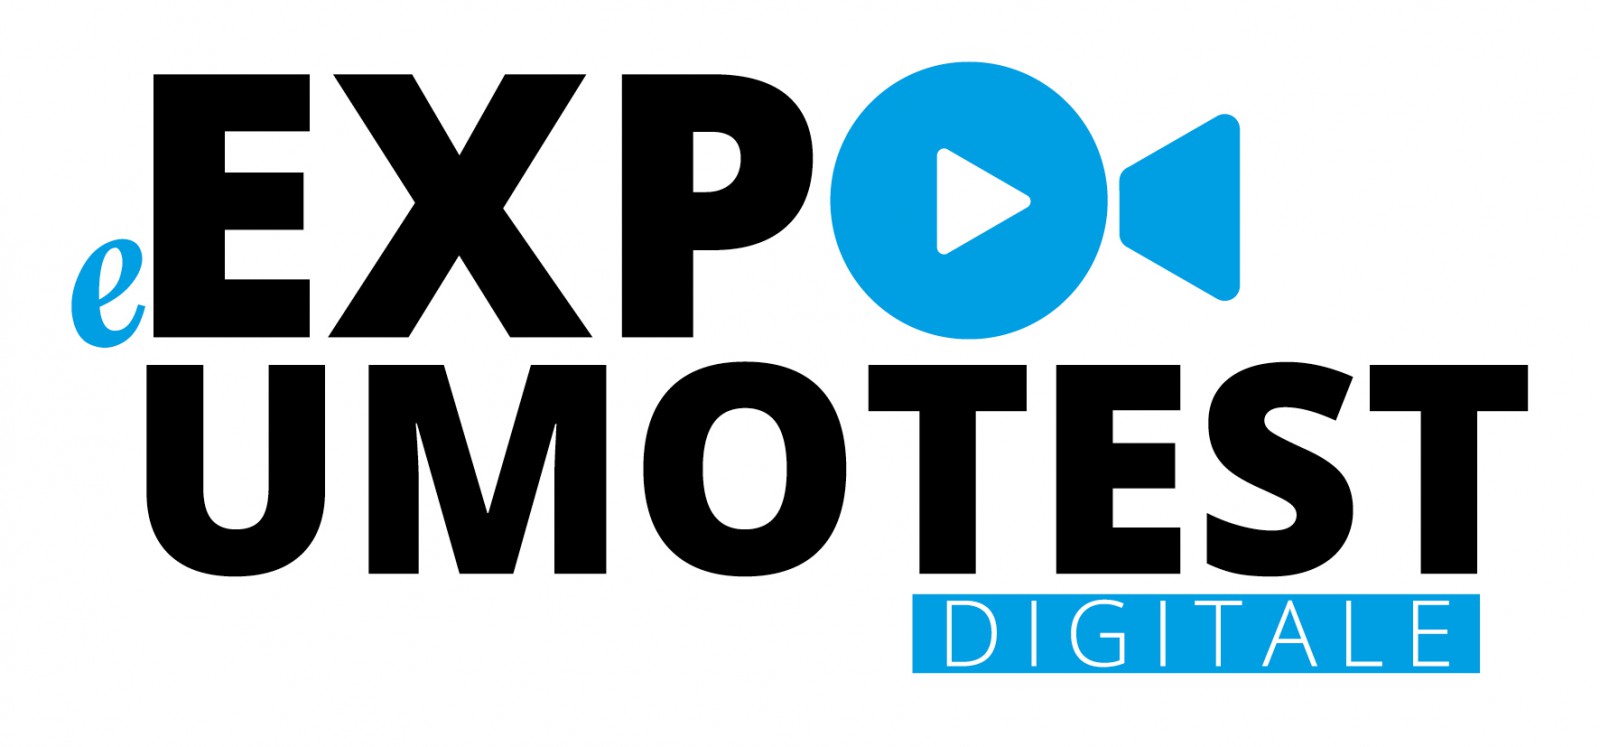 Replay Expo Umotest 2021 - 100% digitale